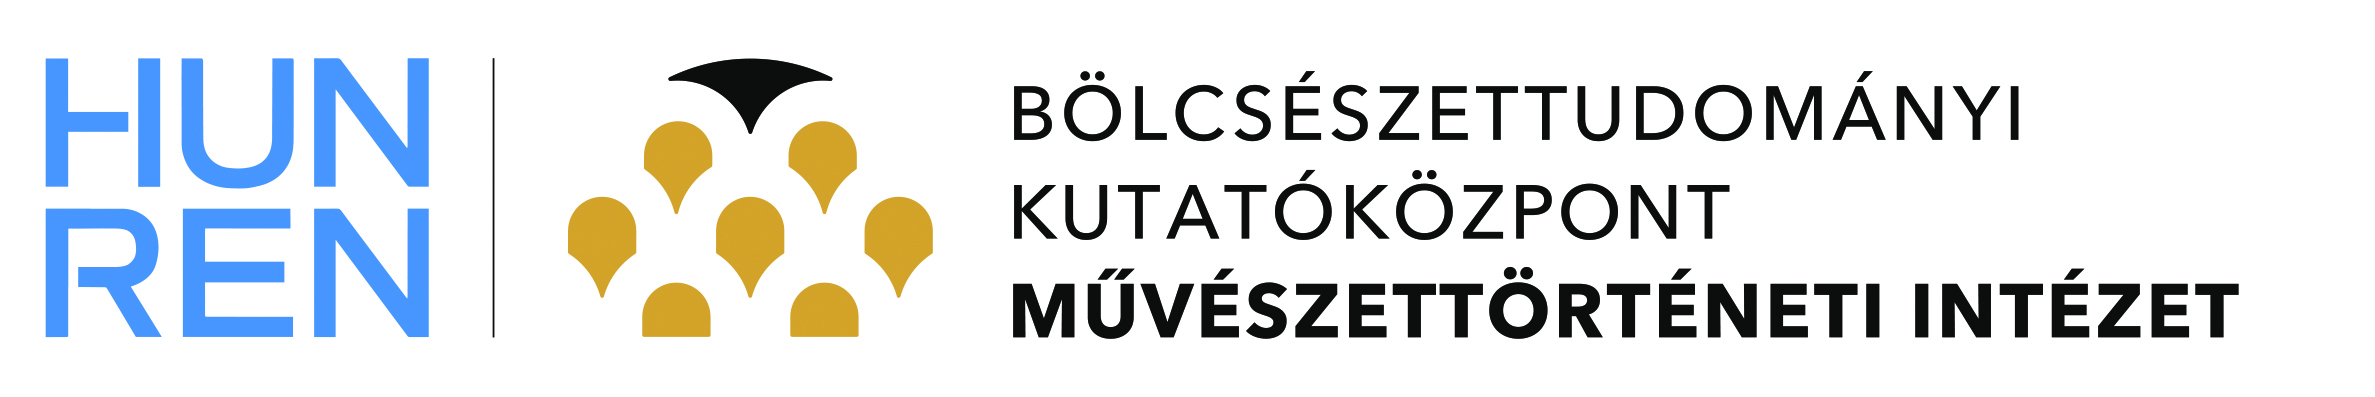 hunren btk muveszettortenet logo szines magyar cmyk